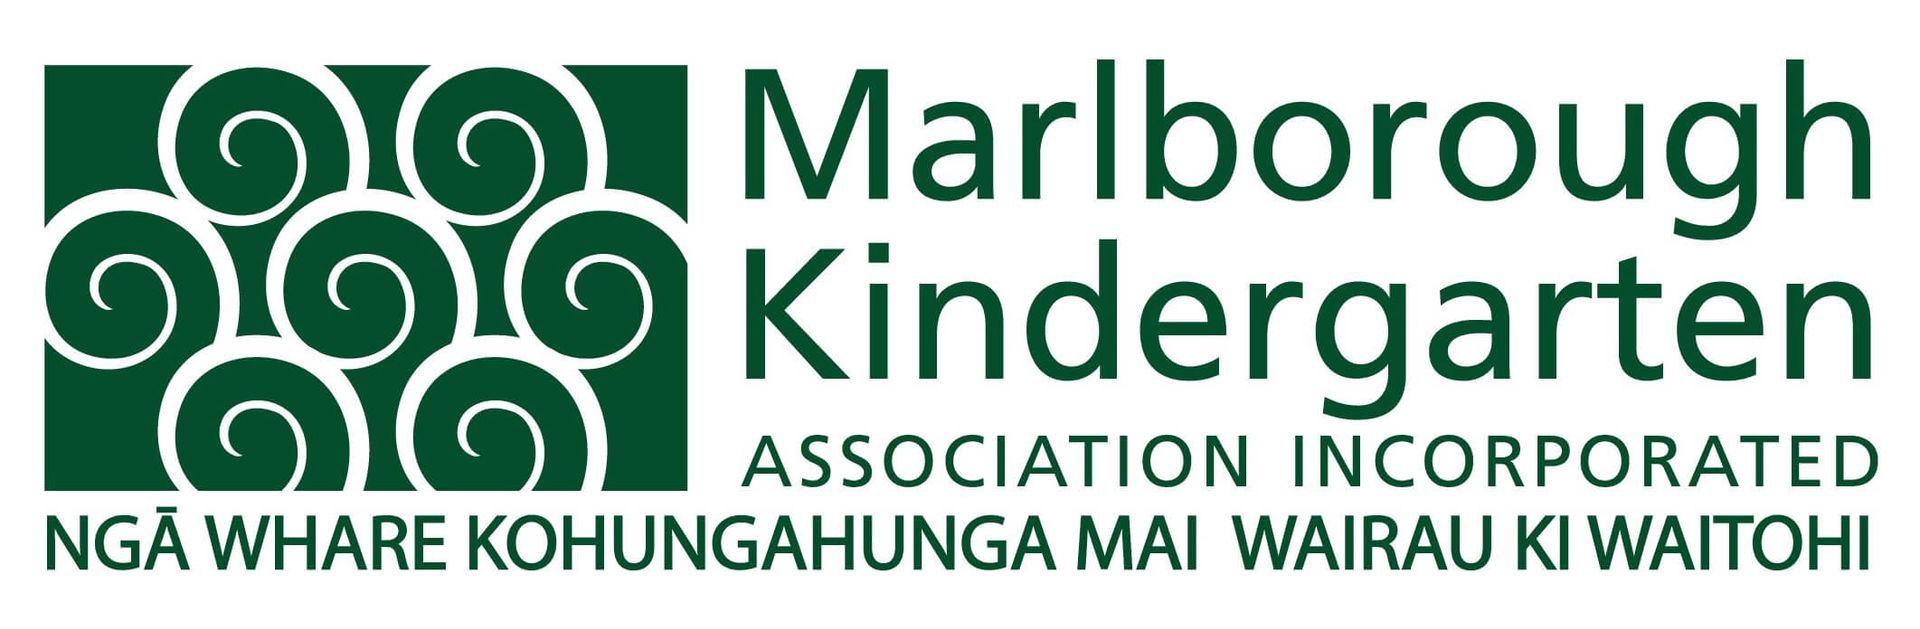 Marlborough Kindergarten Association logo